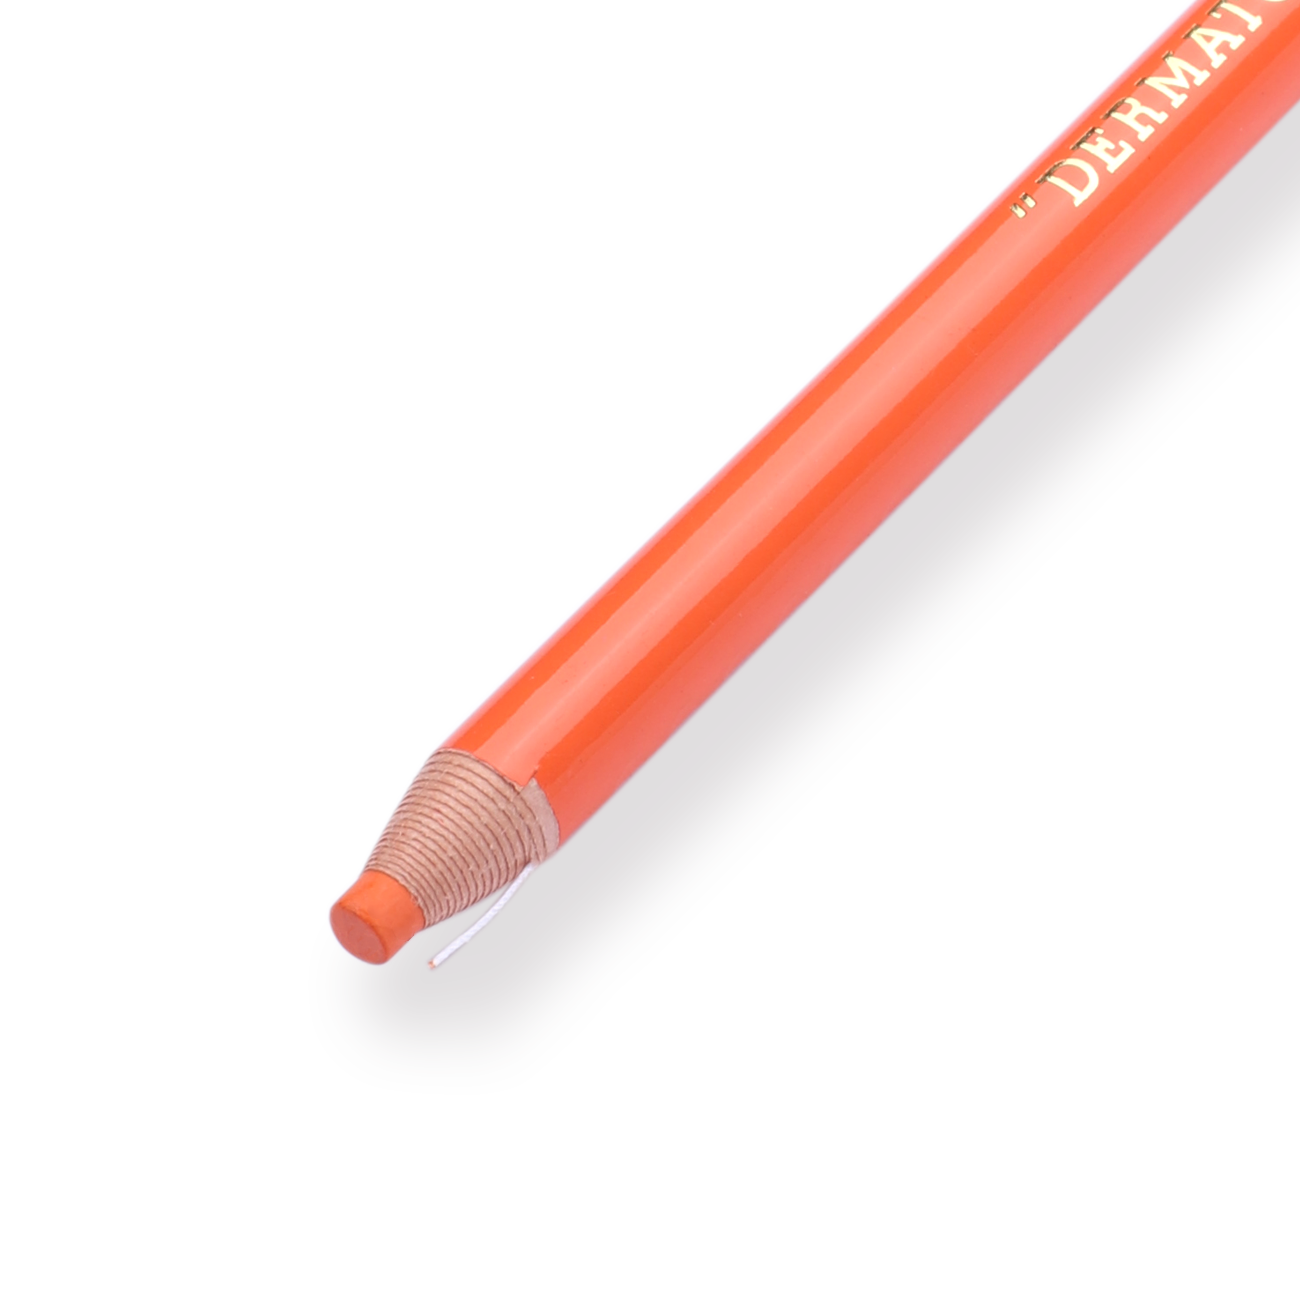 Uni-ball Dermatograph 7600 Colored Pencil - Orange - Stationery Pal